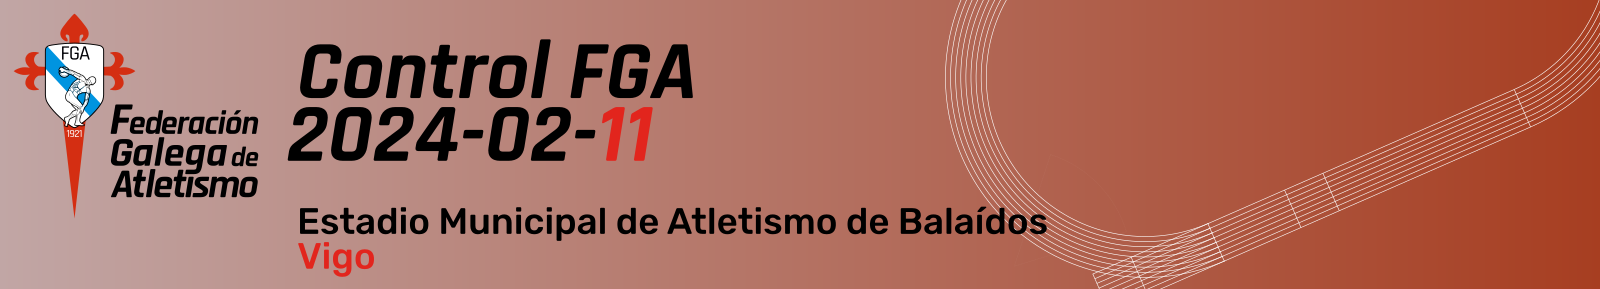  Control FGA AL 2024-02-11.  Estadio Municipal de Atletismo de Balaídos, 11 febreiro 2024